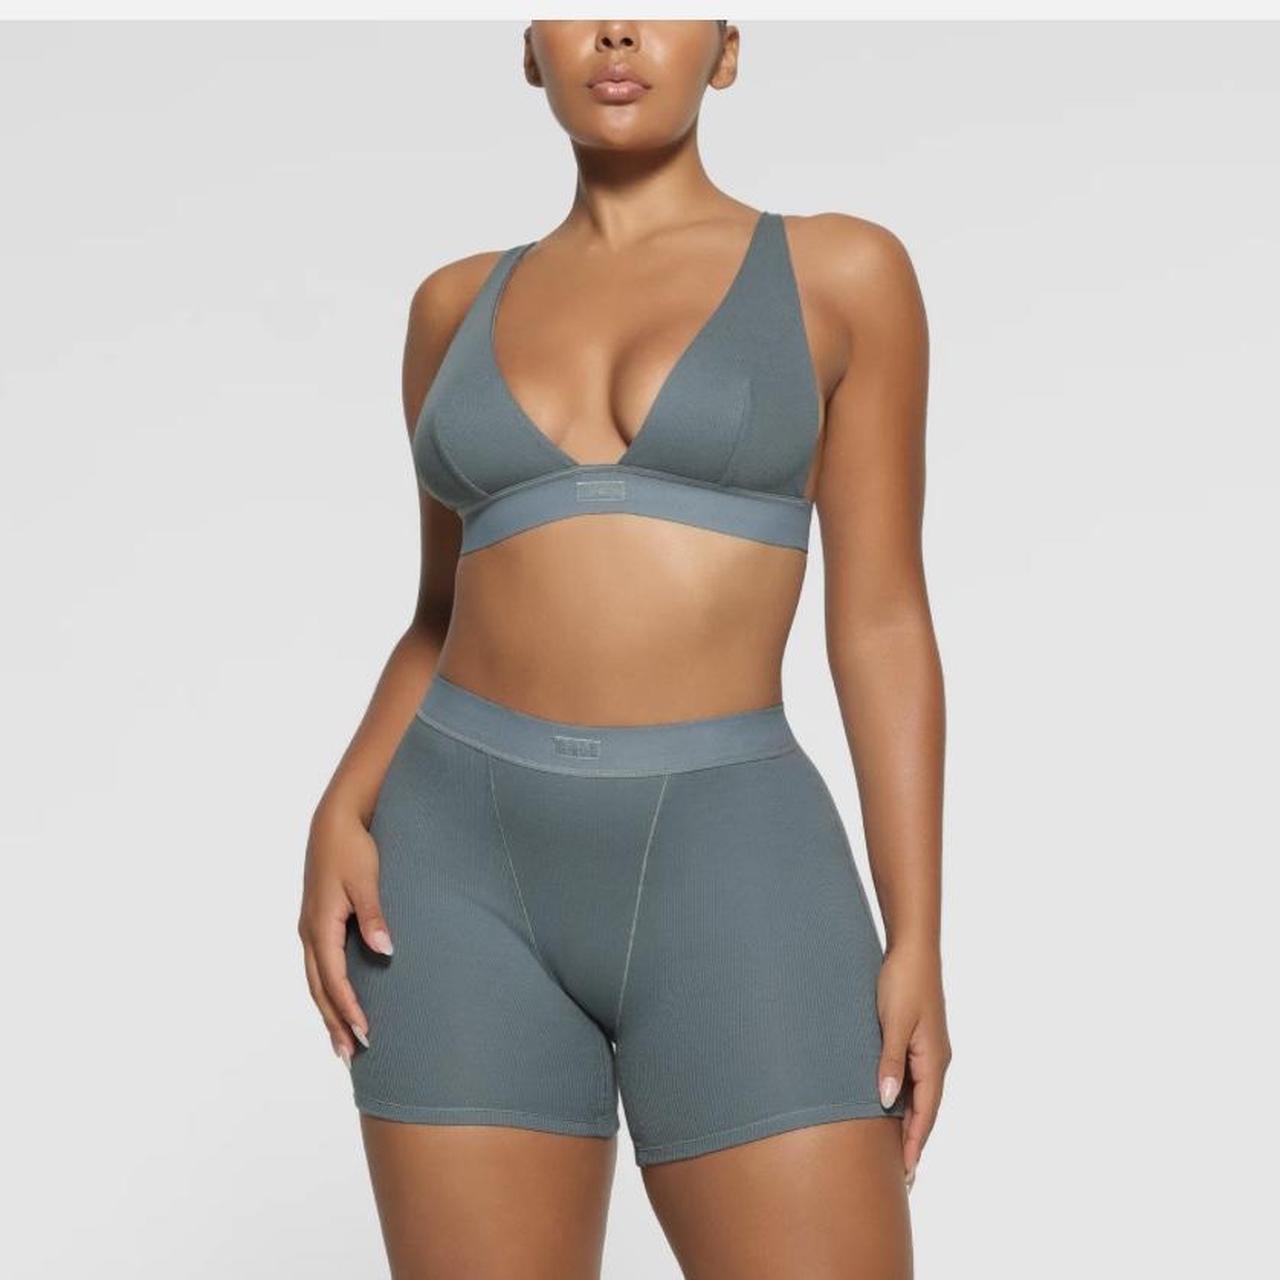 Skims swim shorts Sold out on website Medium - Depop